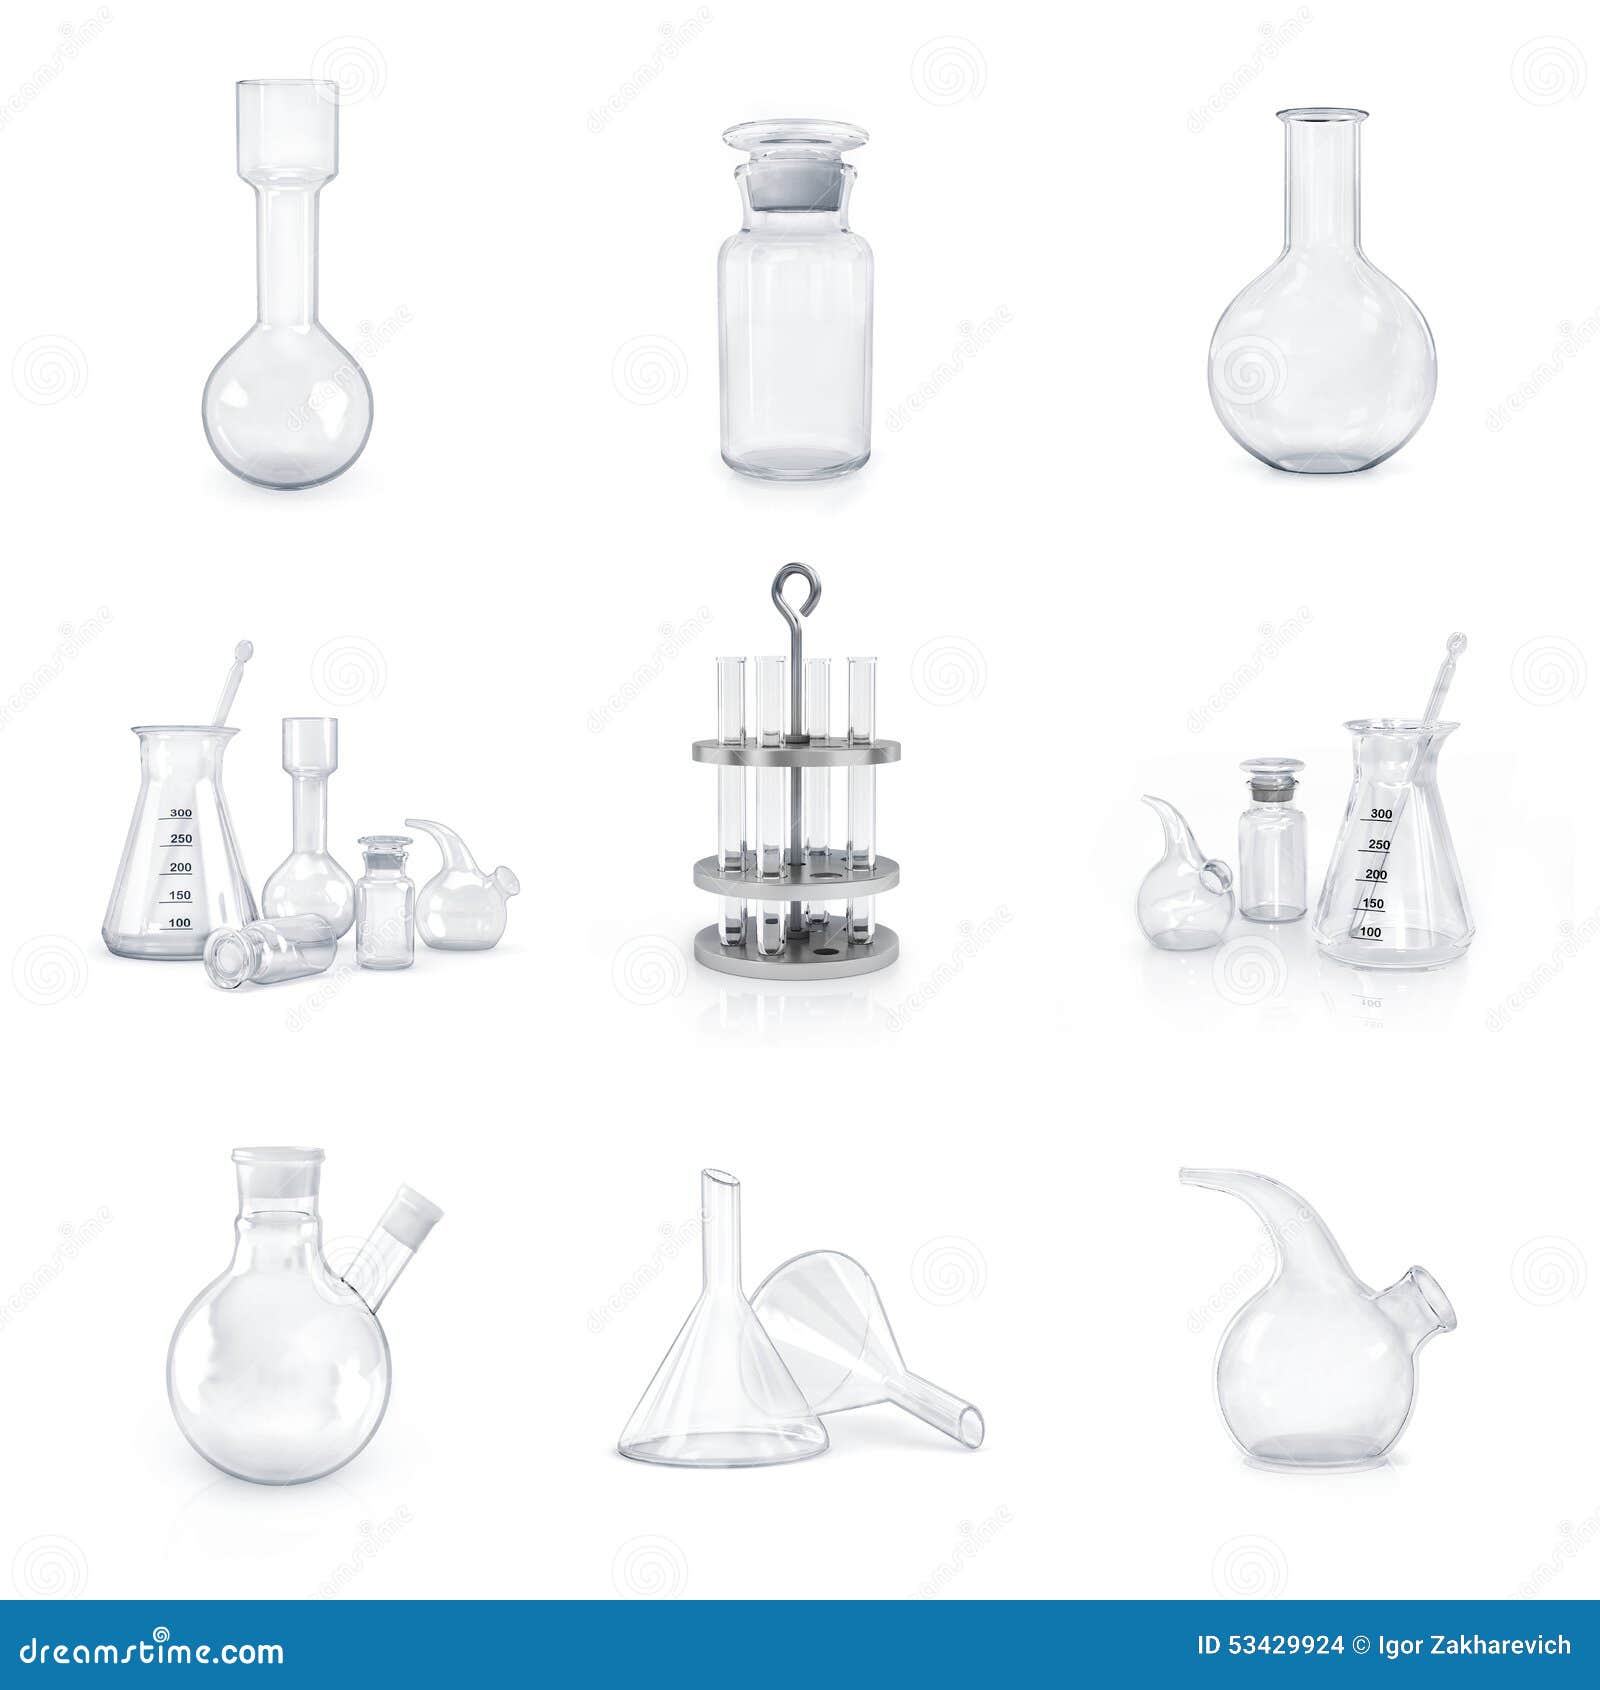 set of laboratory glassware on white backg round.